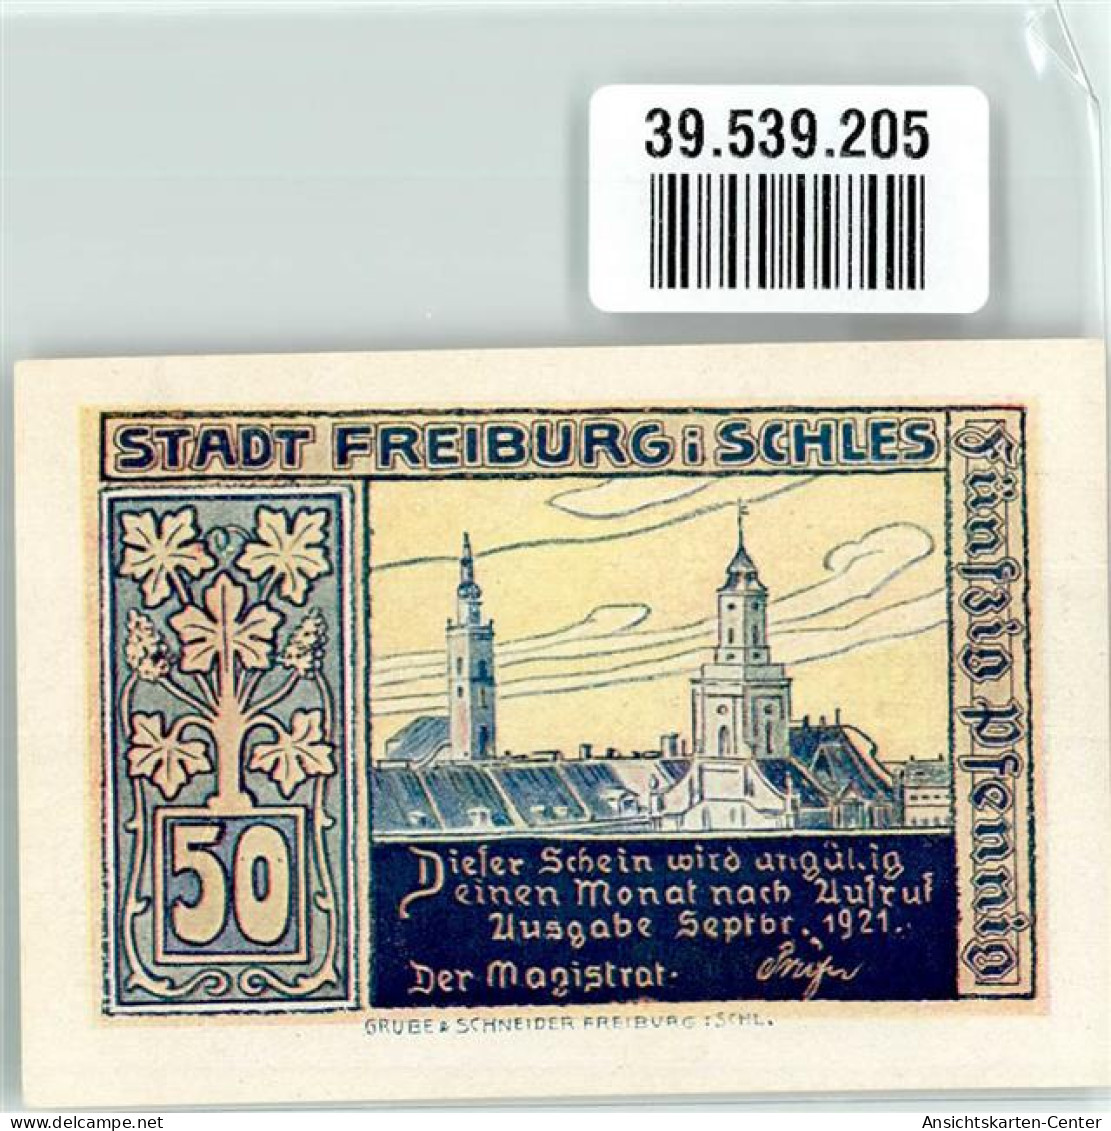 39539205 - Freiburg I. Schles. Swiebodzice - Polen